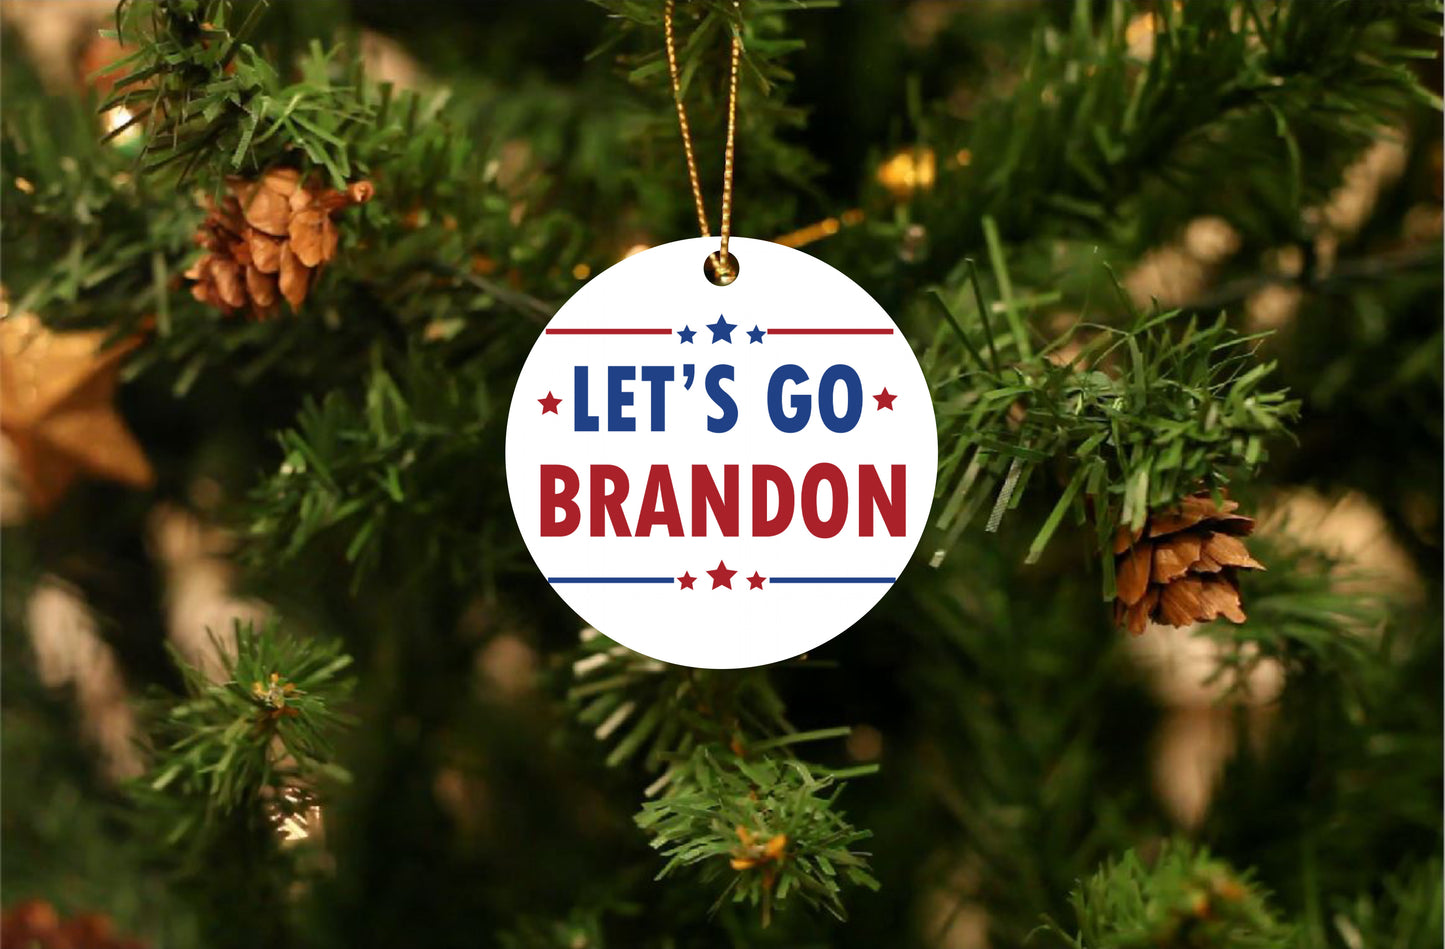 Let's Go Brandon Ornament